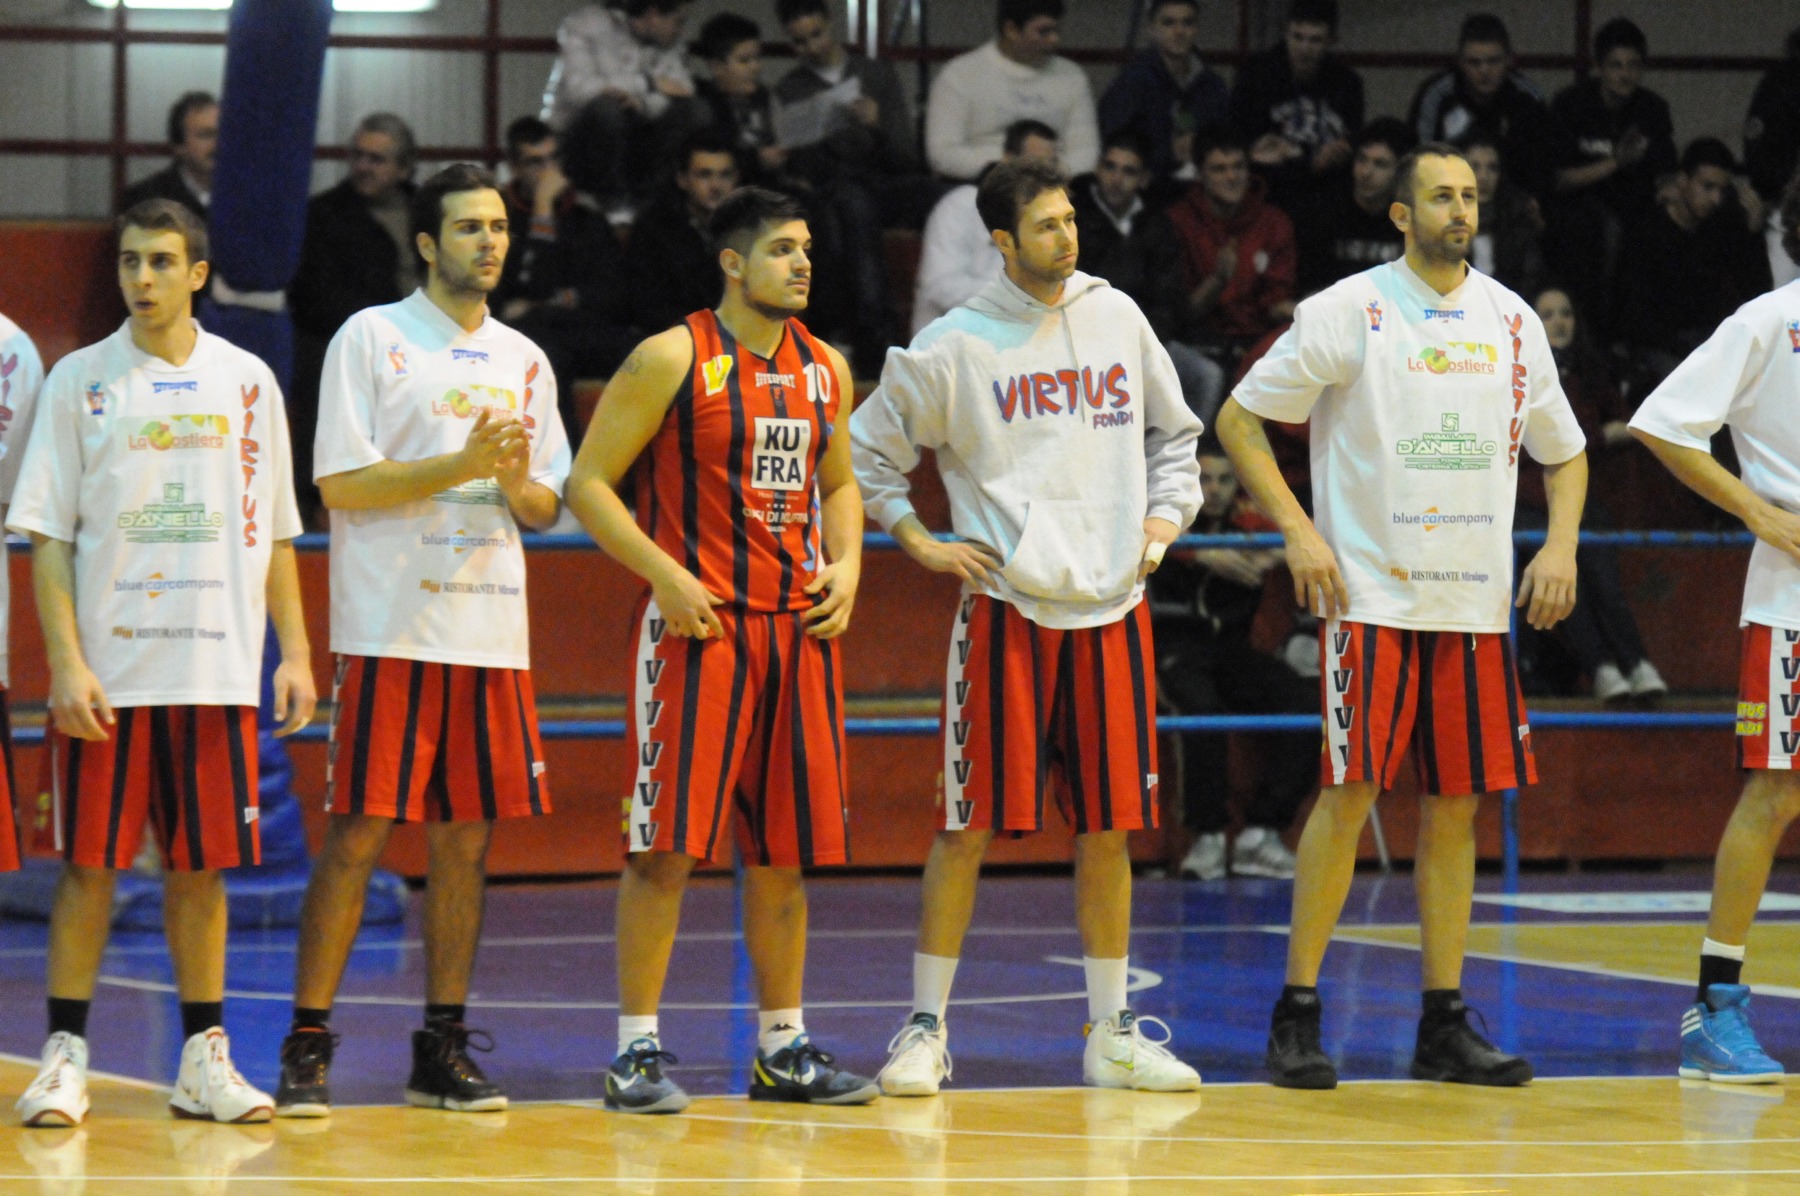 2012-02-19 CGold Virtus Basket Aprilia - Virtus Fondi